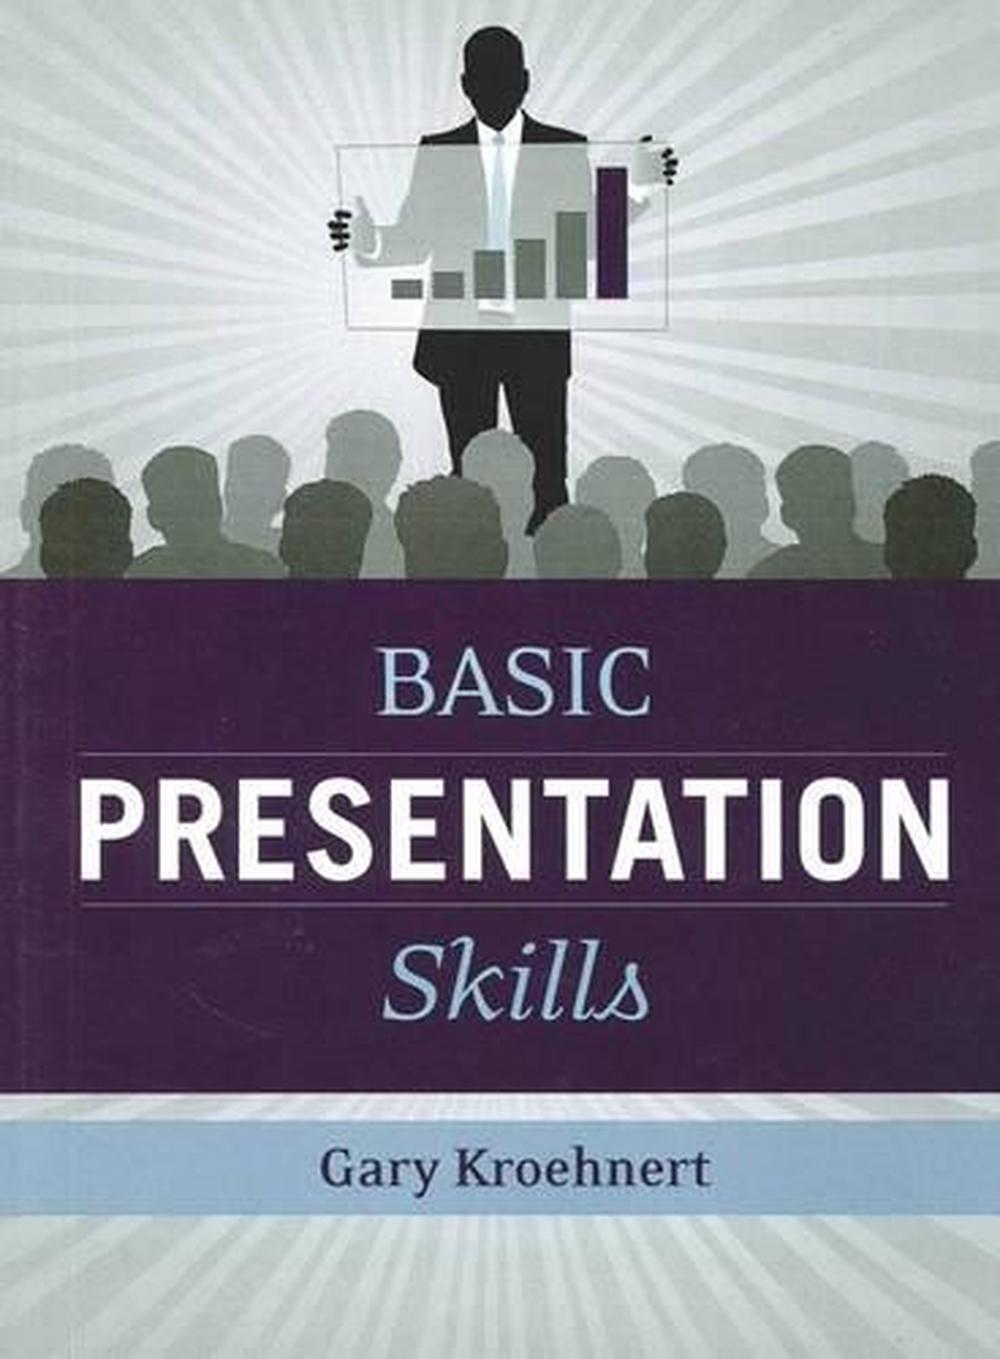 develop your presentation skills book pdf free download